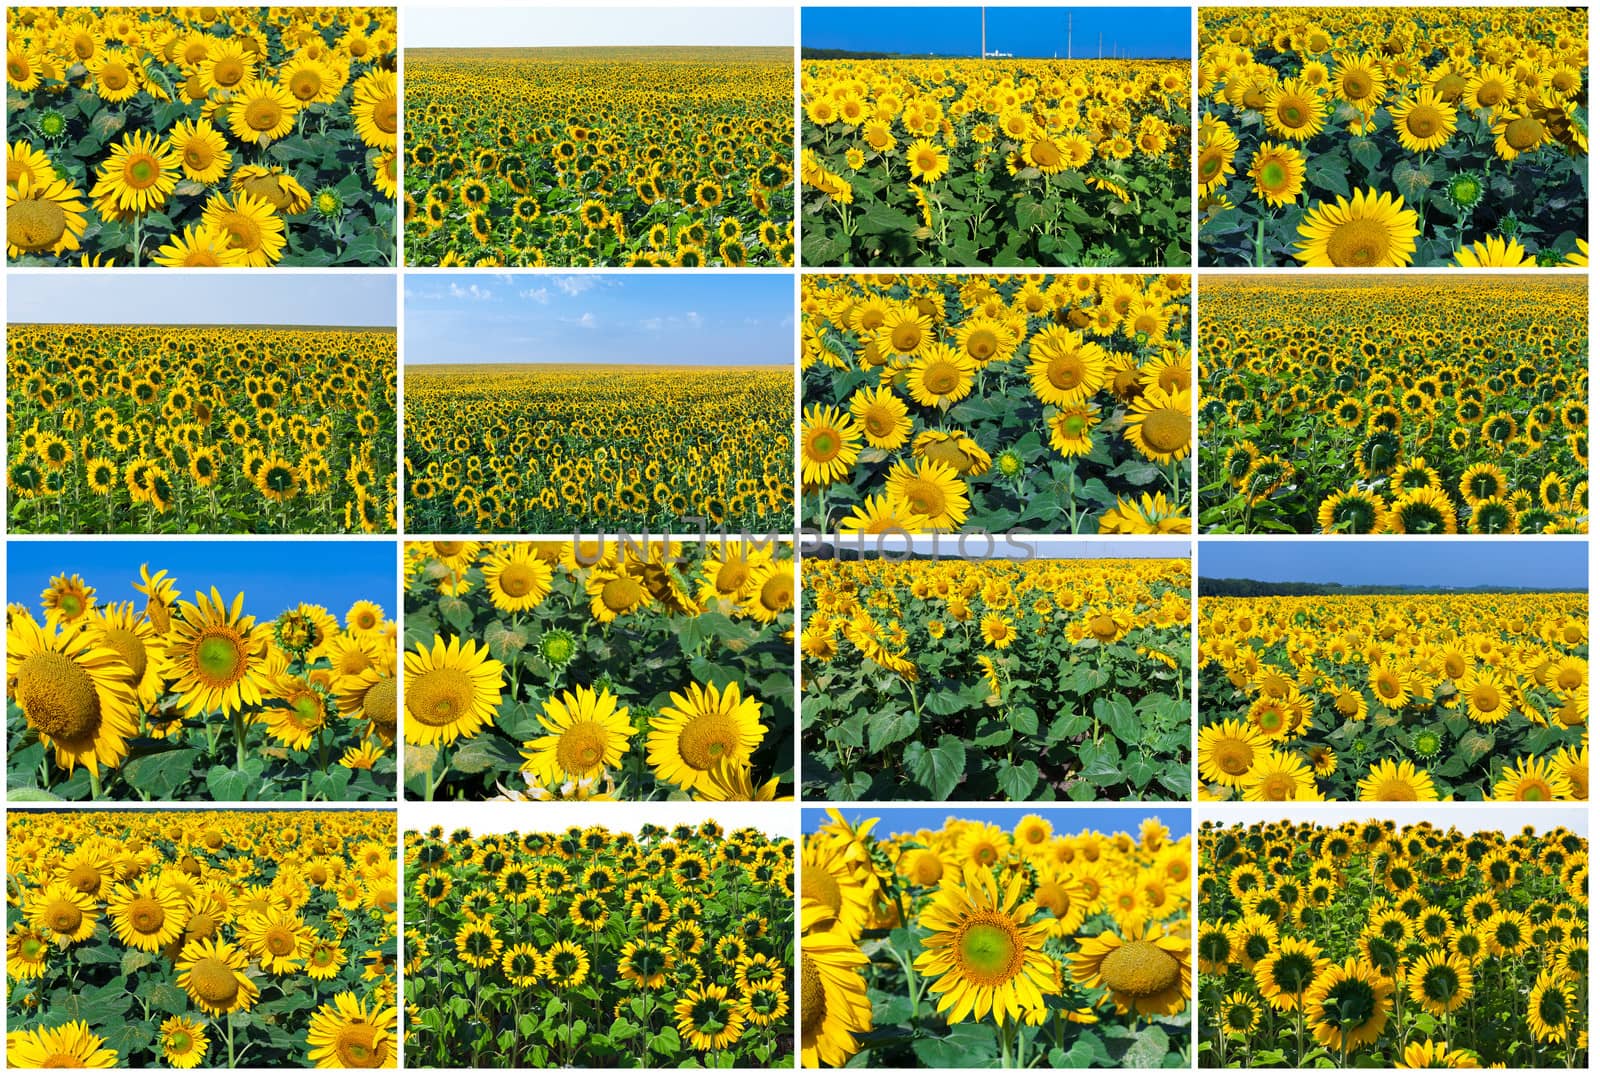 Sunflowers by sailorr